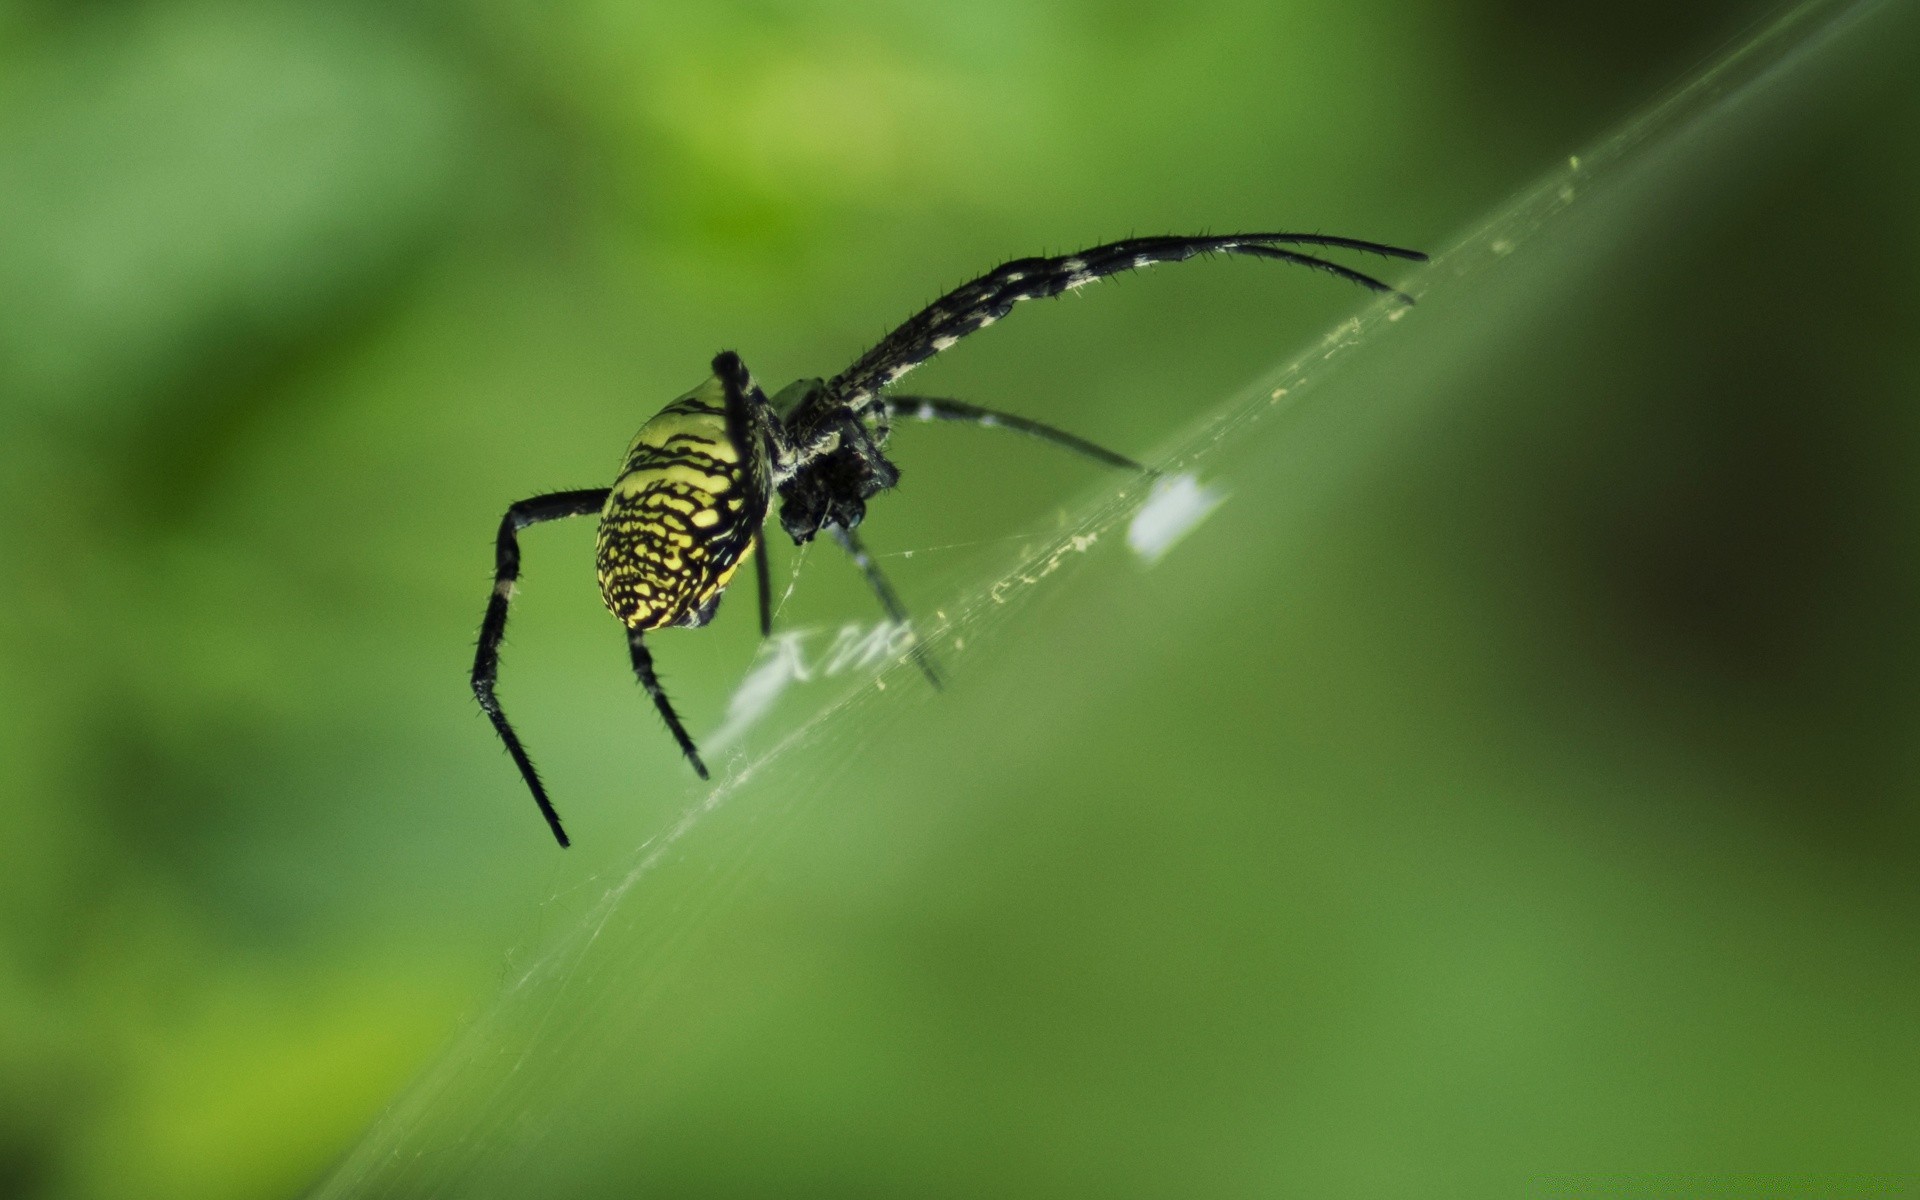 insects spider insect arachnid spiderweb nature invertebrate wildlife dew animal little creepy cobweb web outdoors predator close-up garden